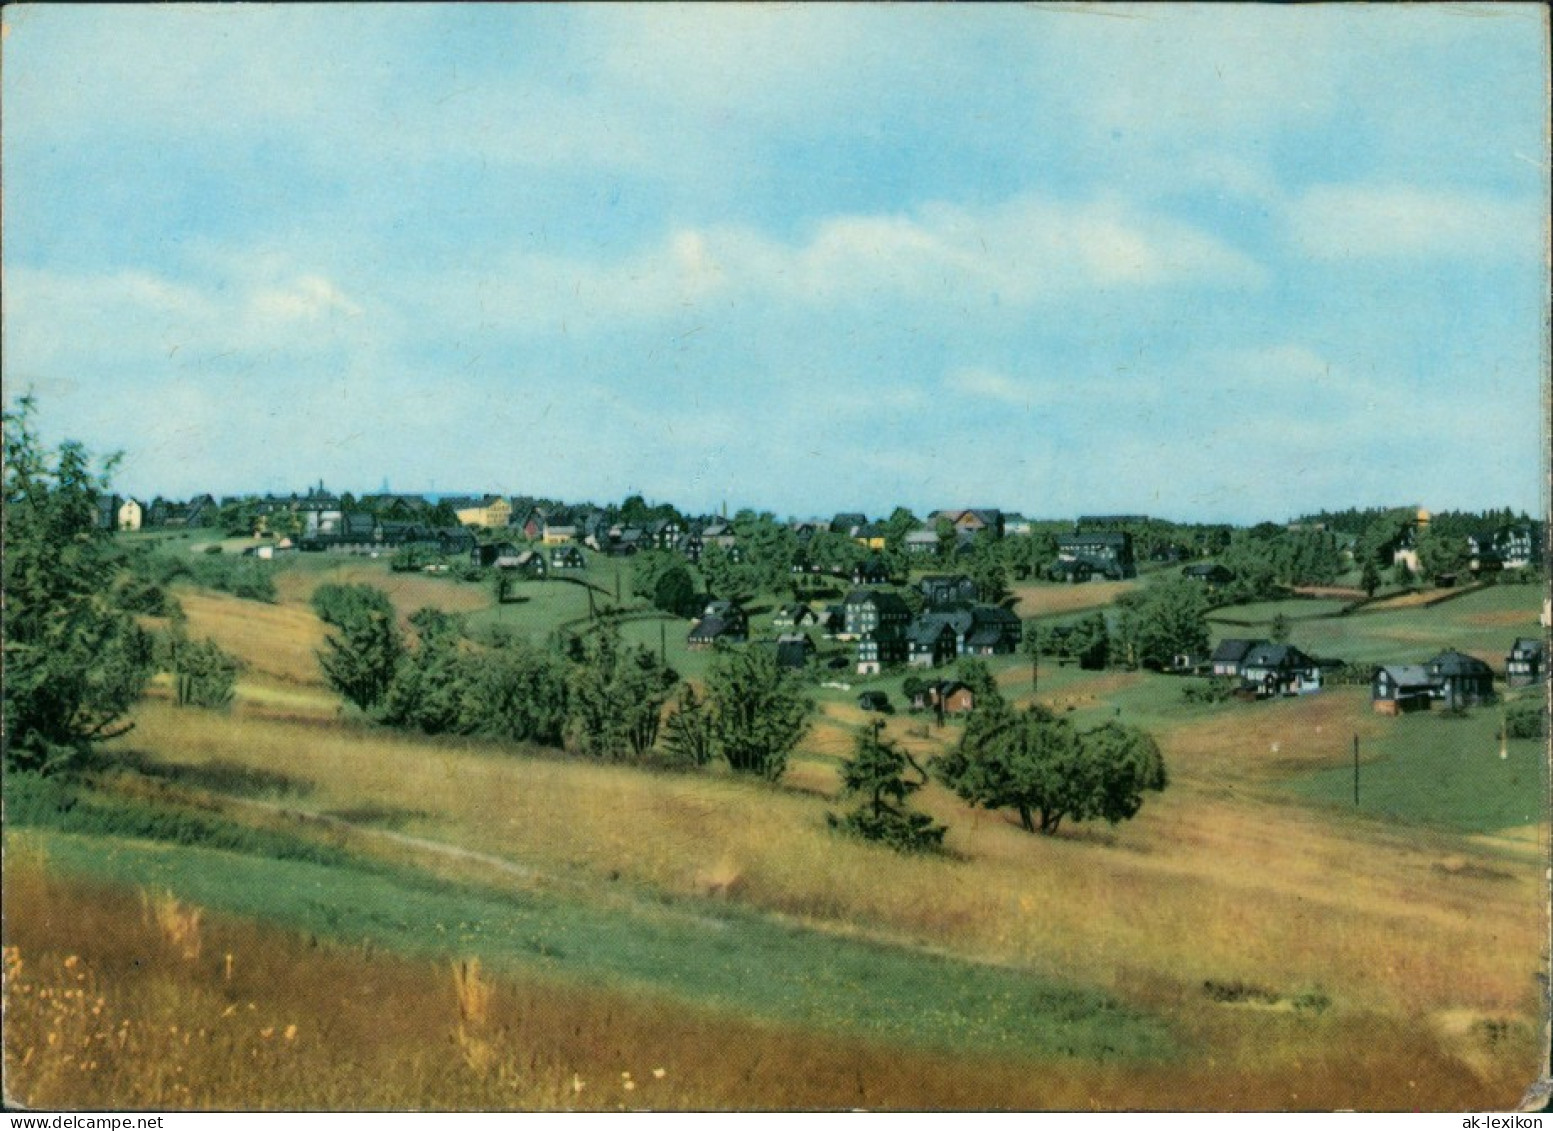 Neuhaus Am Rennweg Panorama-Ansicht Ort Fernansicht DDR Postkarte 1964 - Neuhaus